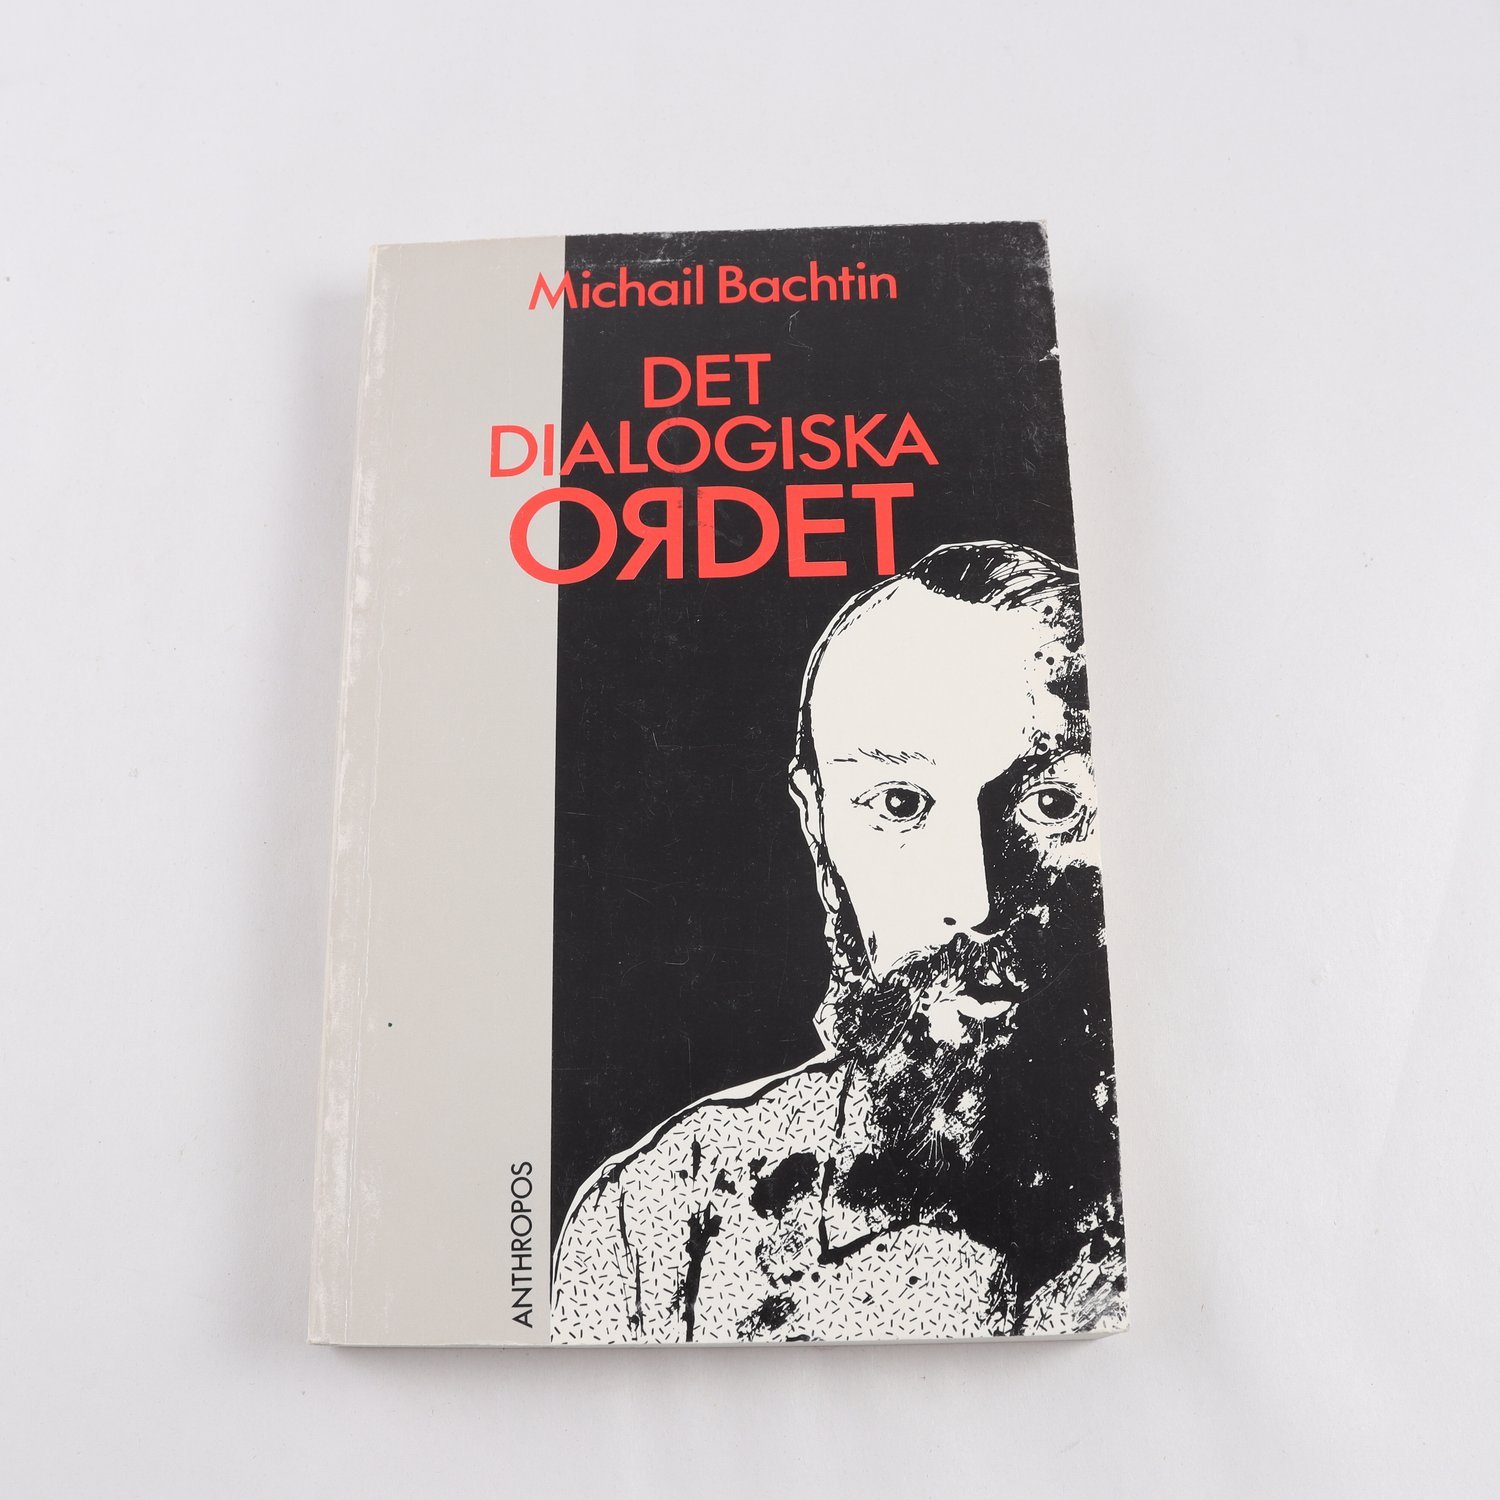 Michail Bachtin, Det dialogiska ordet